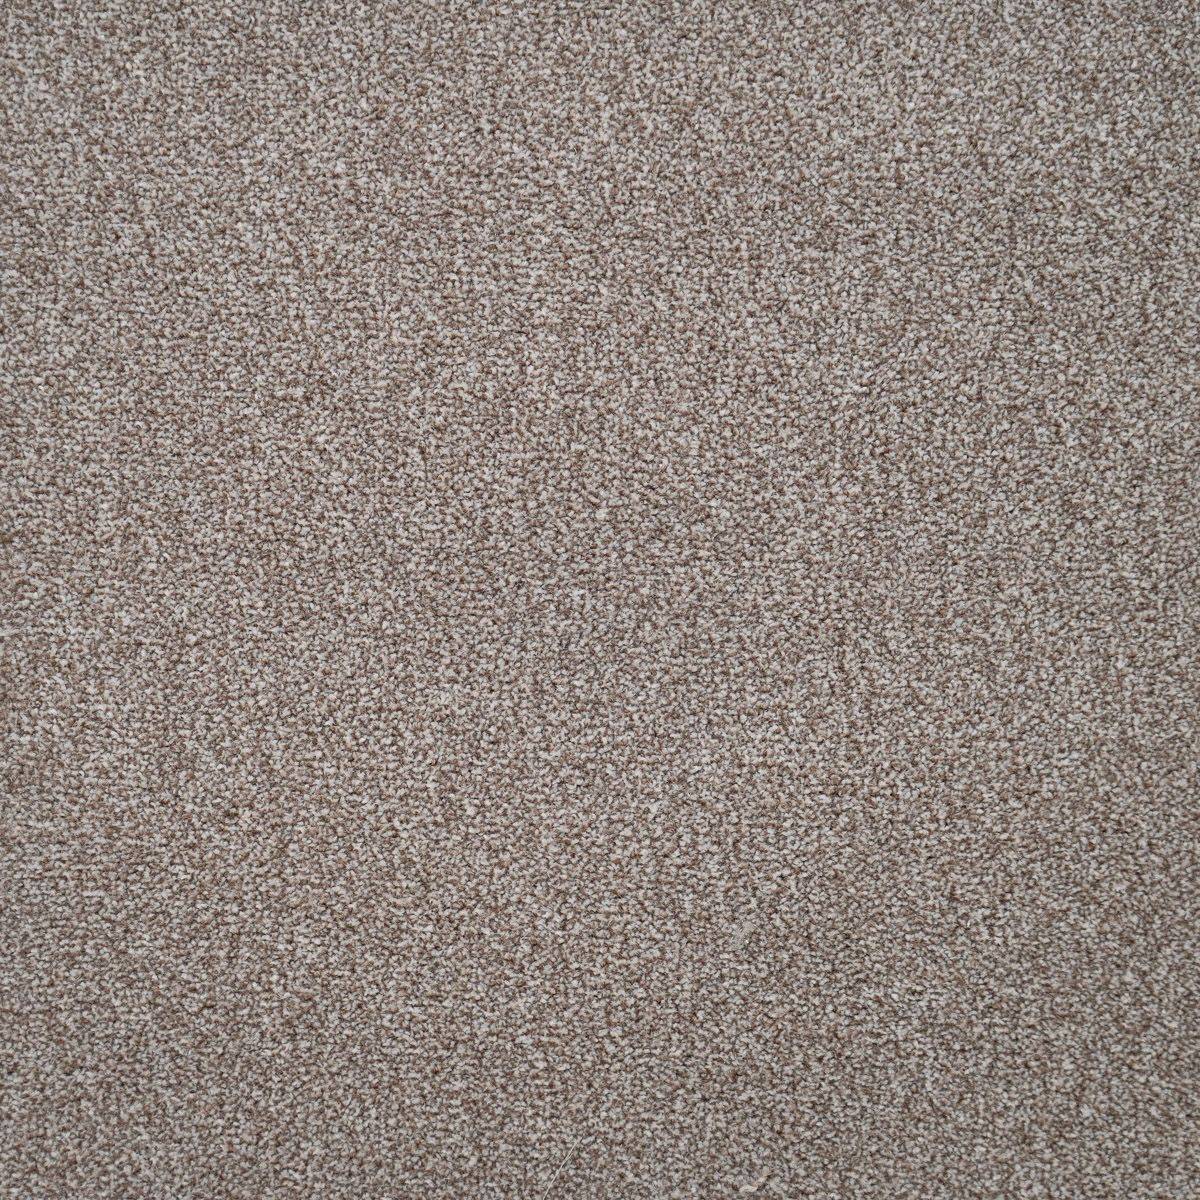 Flooring Hut Carpets Westminster - Twist Bark 